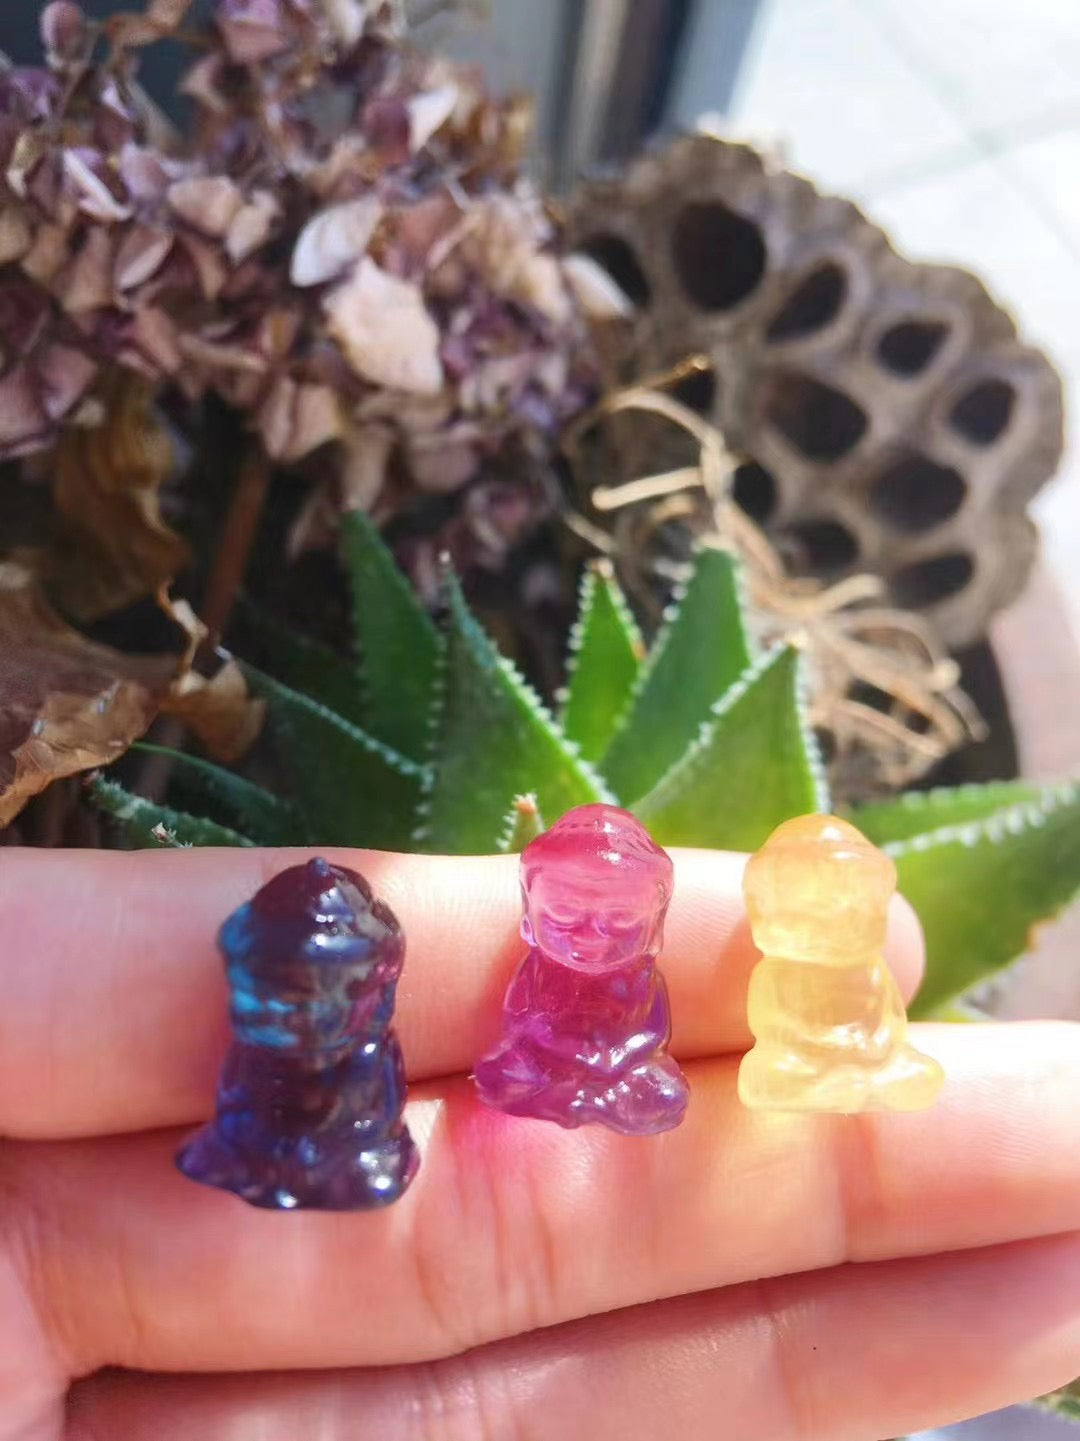 Mini Fluorite Crystal shaped like Buddha, Rabbit, and Hamster4